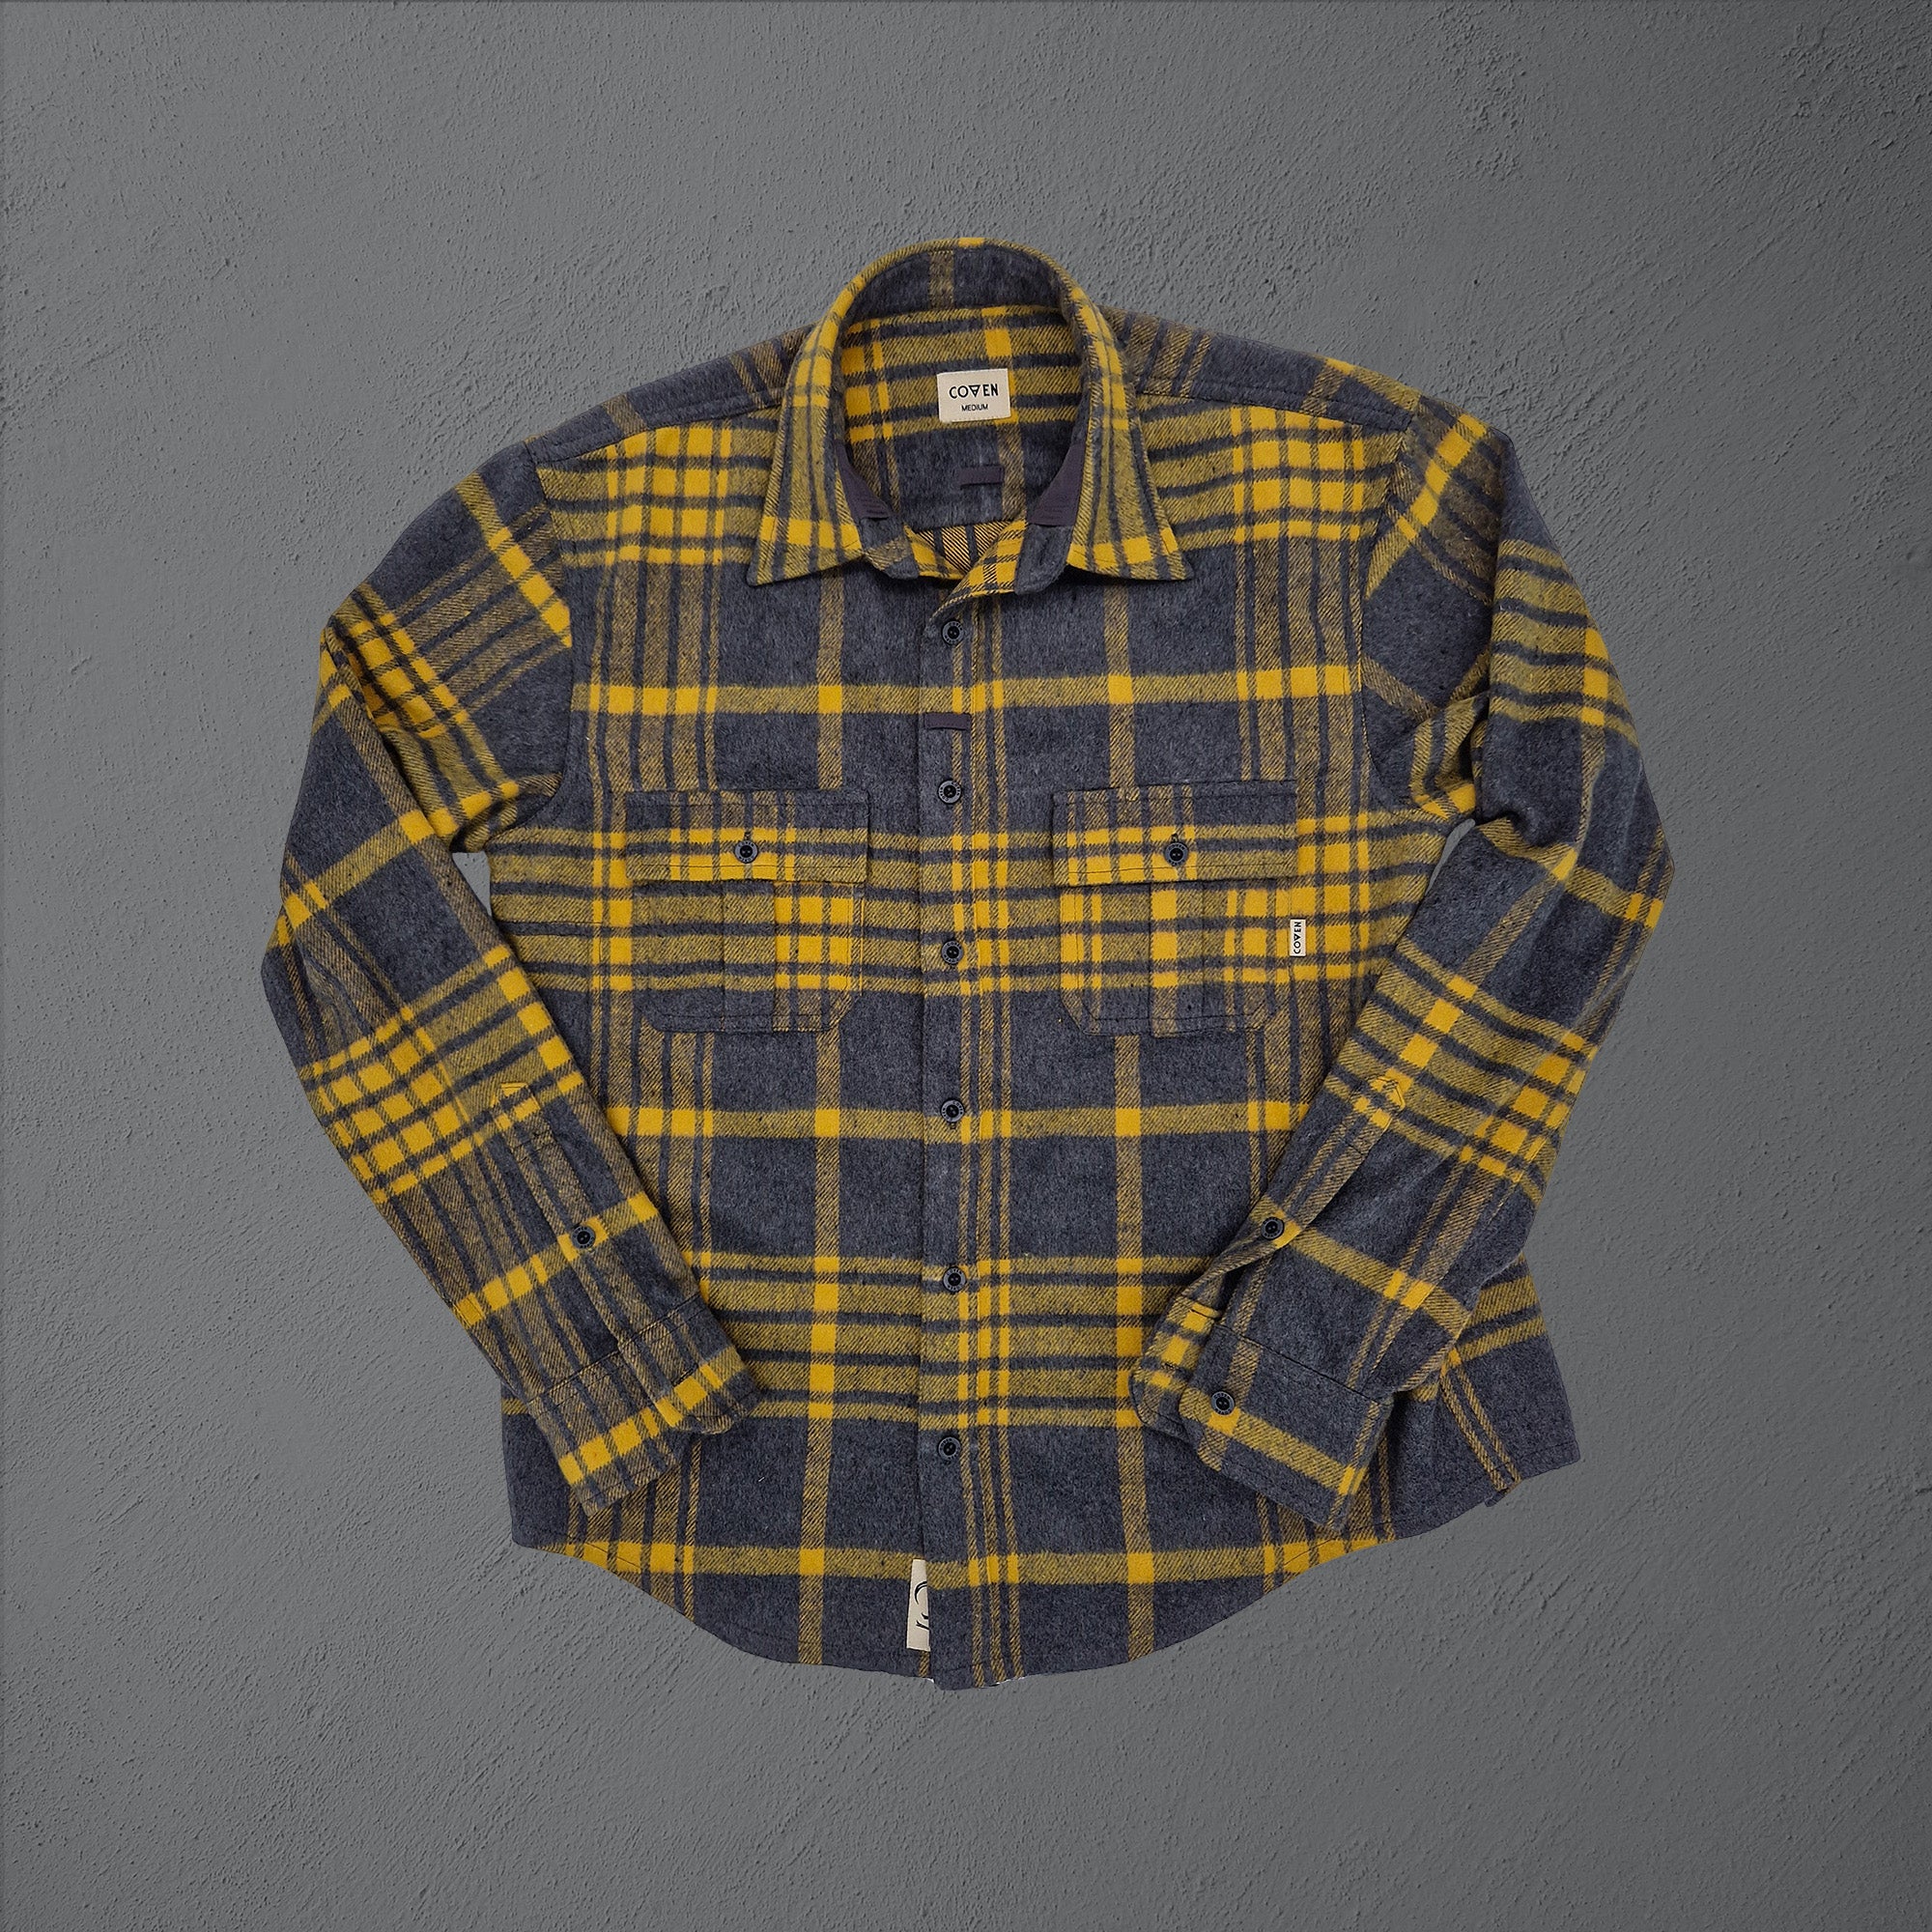 El Flannel - Flannel shirt